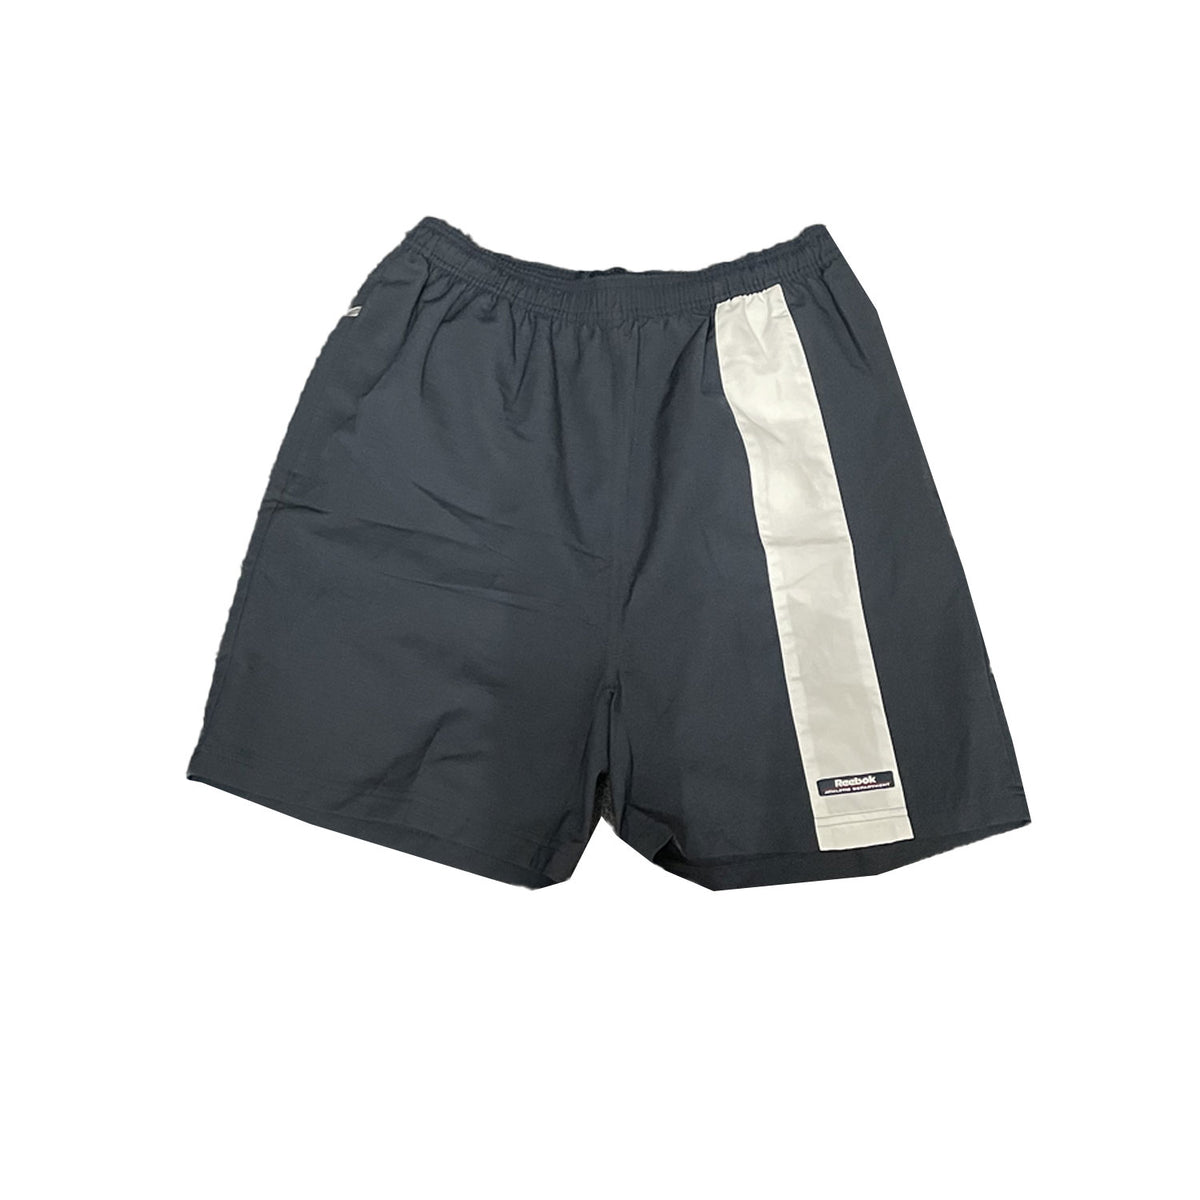 Reebok Original Women's Contrast Athletic Shorts